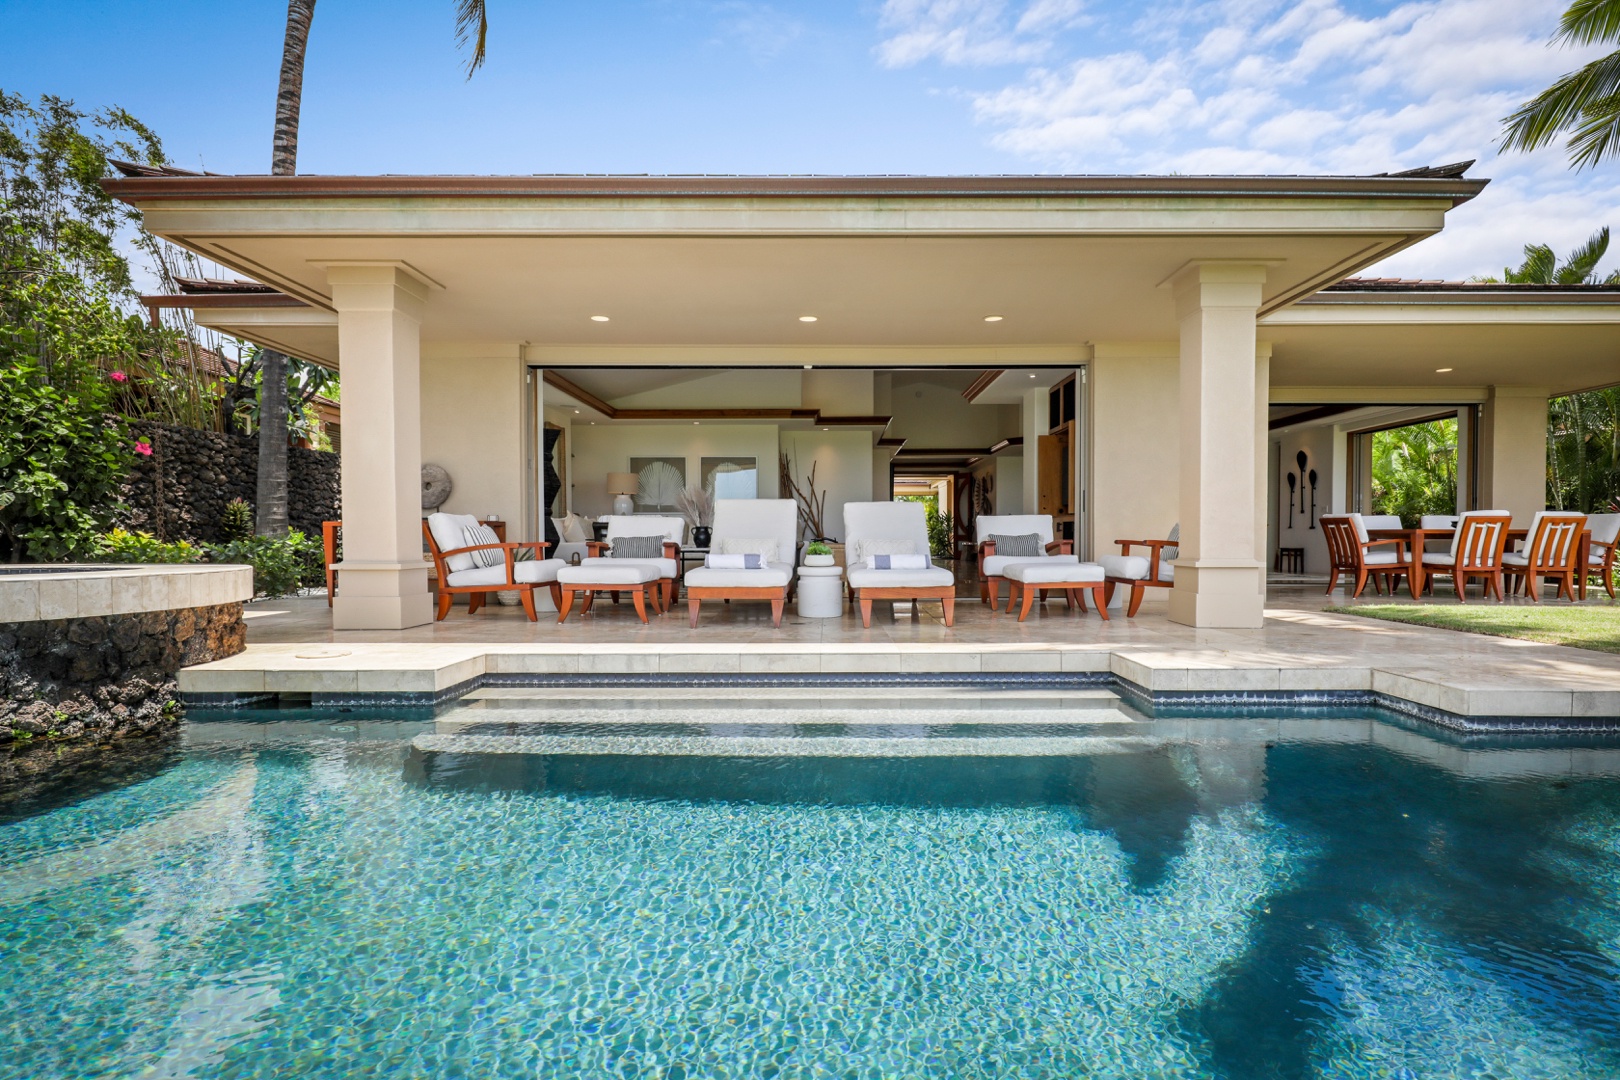 Kailua Kona Vacation Rentals, 4BD Pakui Street (147) Estate Home at Four Seasons Resort at Hualalai - Ample pool deck lounge seating and multiple lanais (decks).